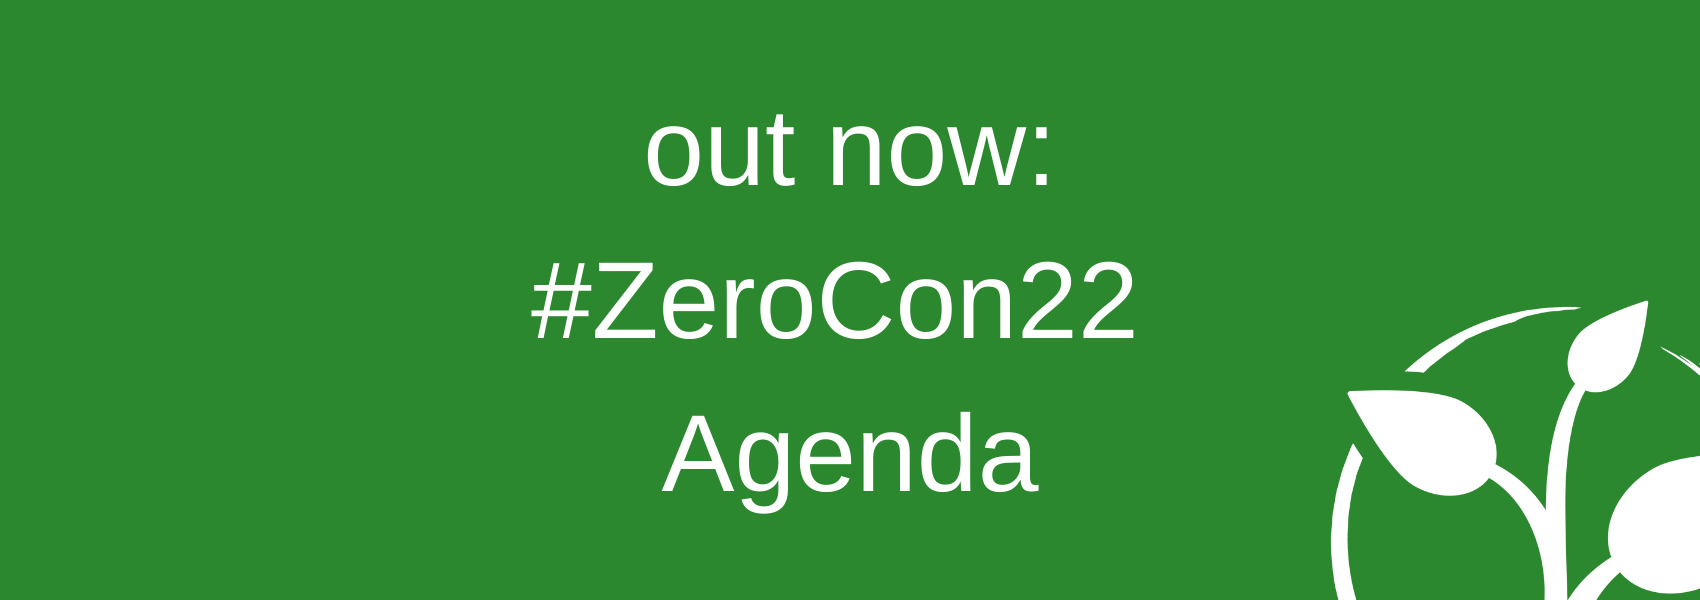 Zero Project logo and text reading "out now: #ZeroCon22 Agenda"